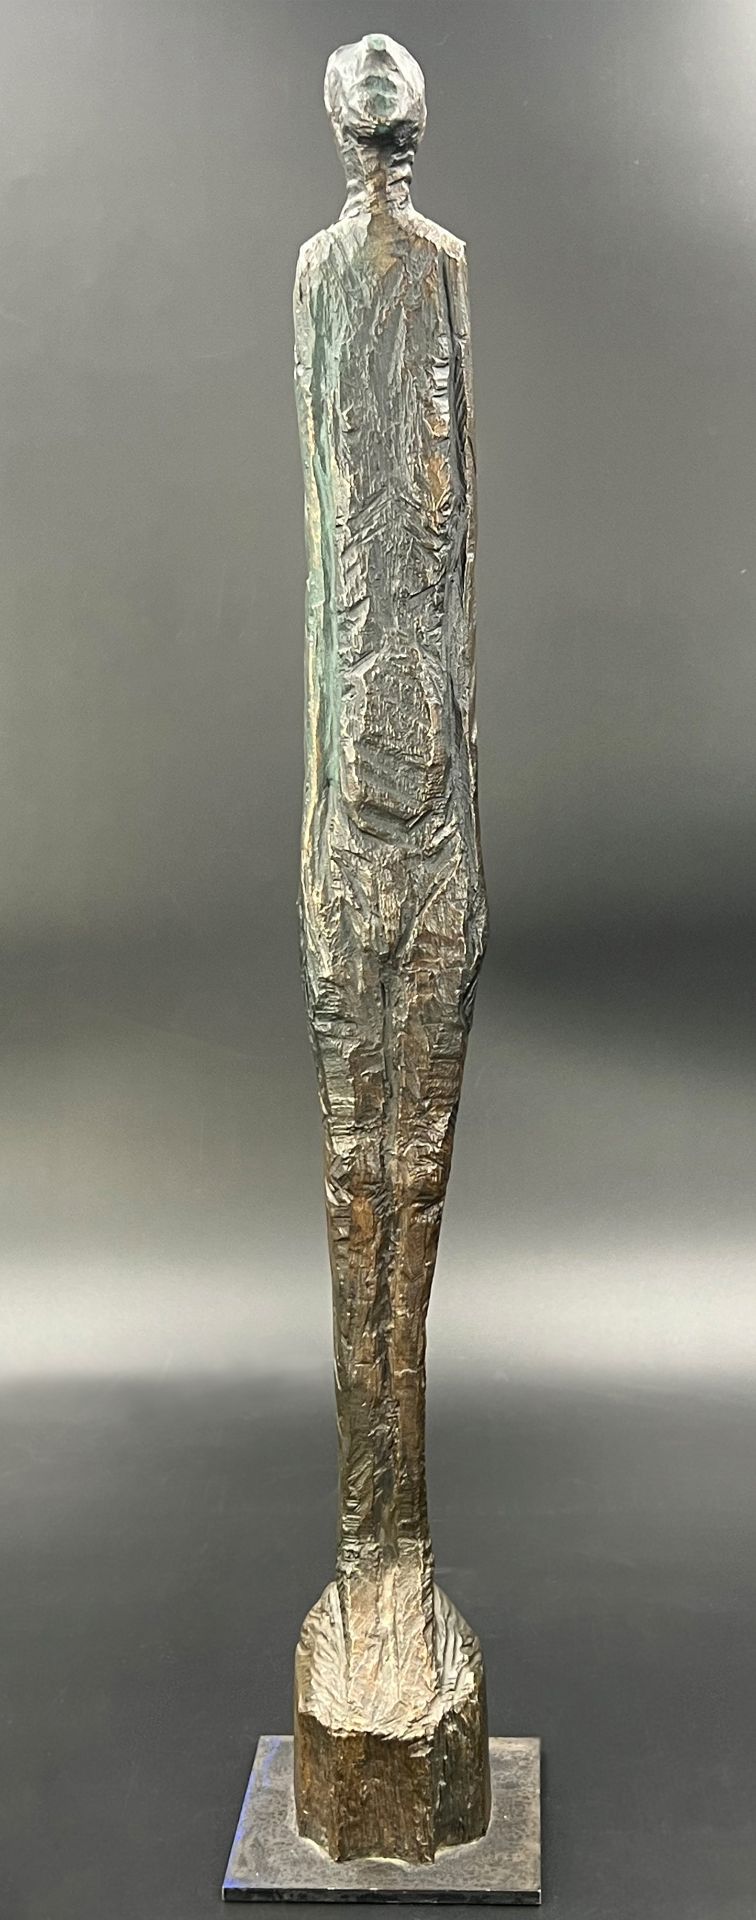 Walter SCHEMBS (1956). Bronze. "Small stele".